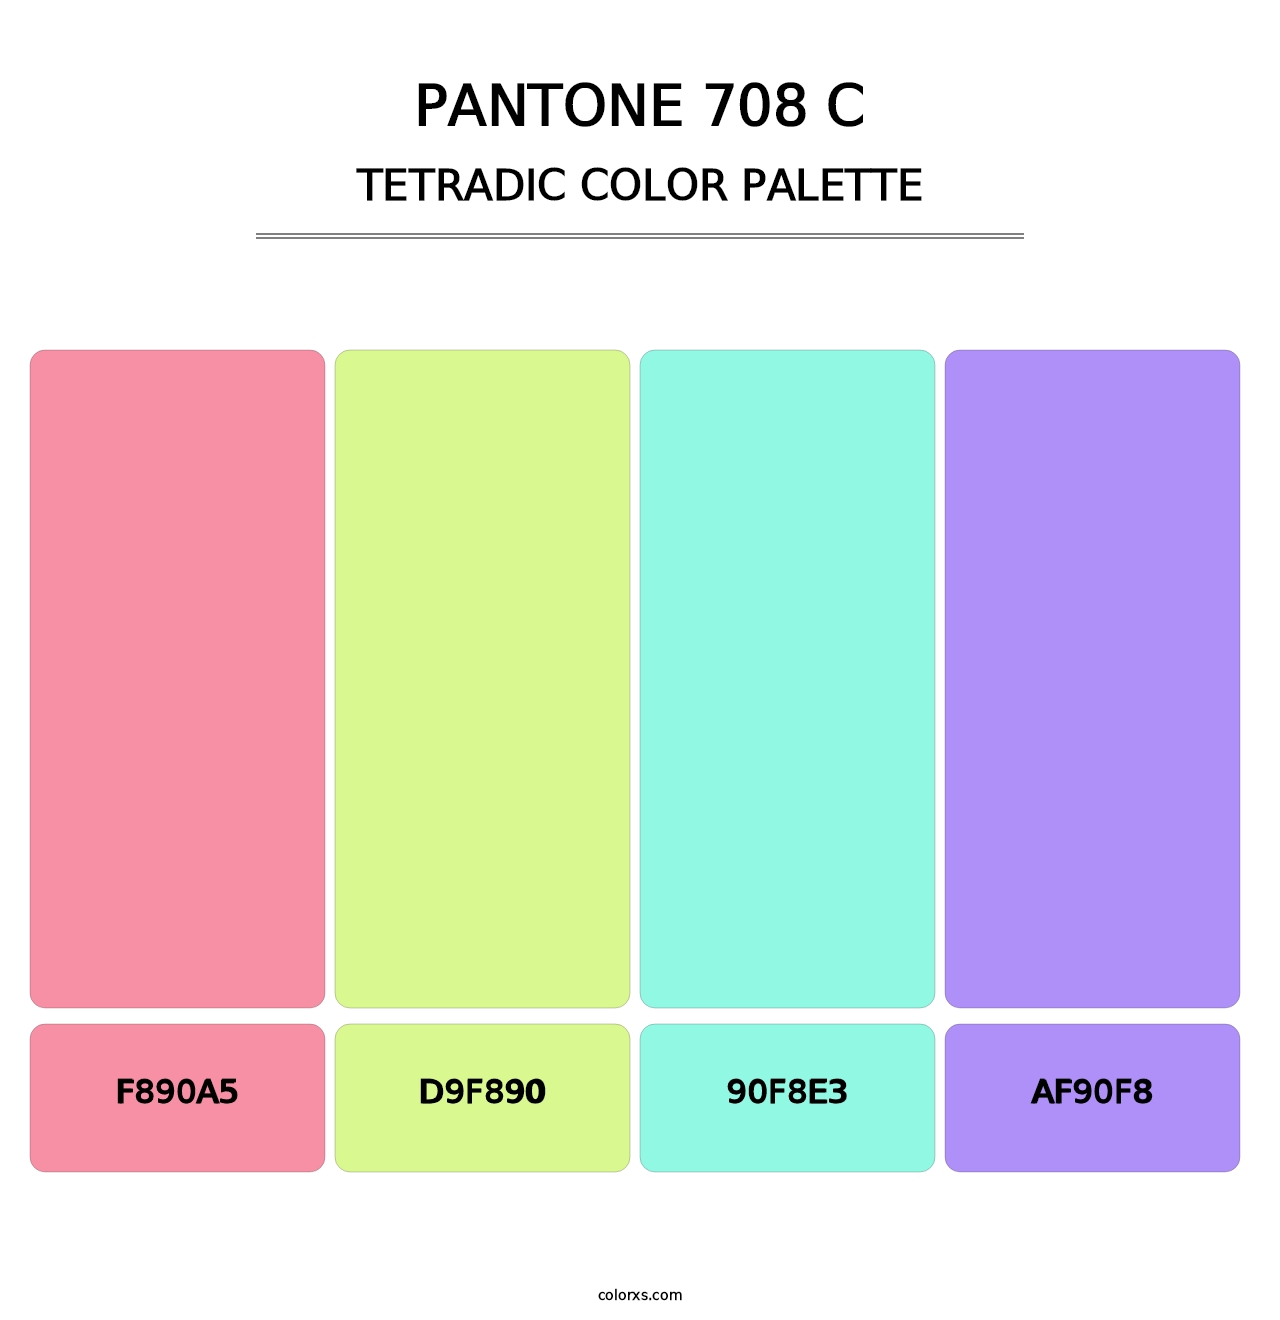 PANTONE 708 C - Tetradic Color Palette